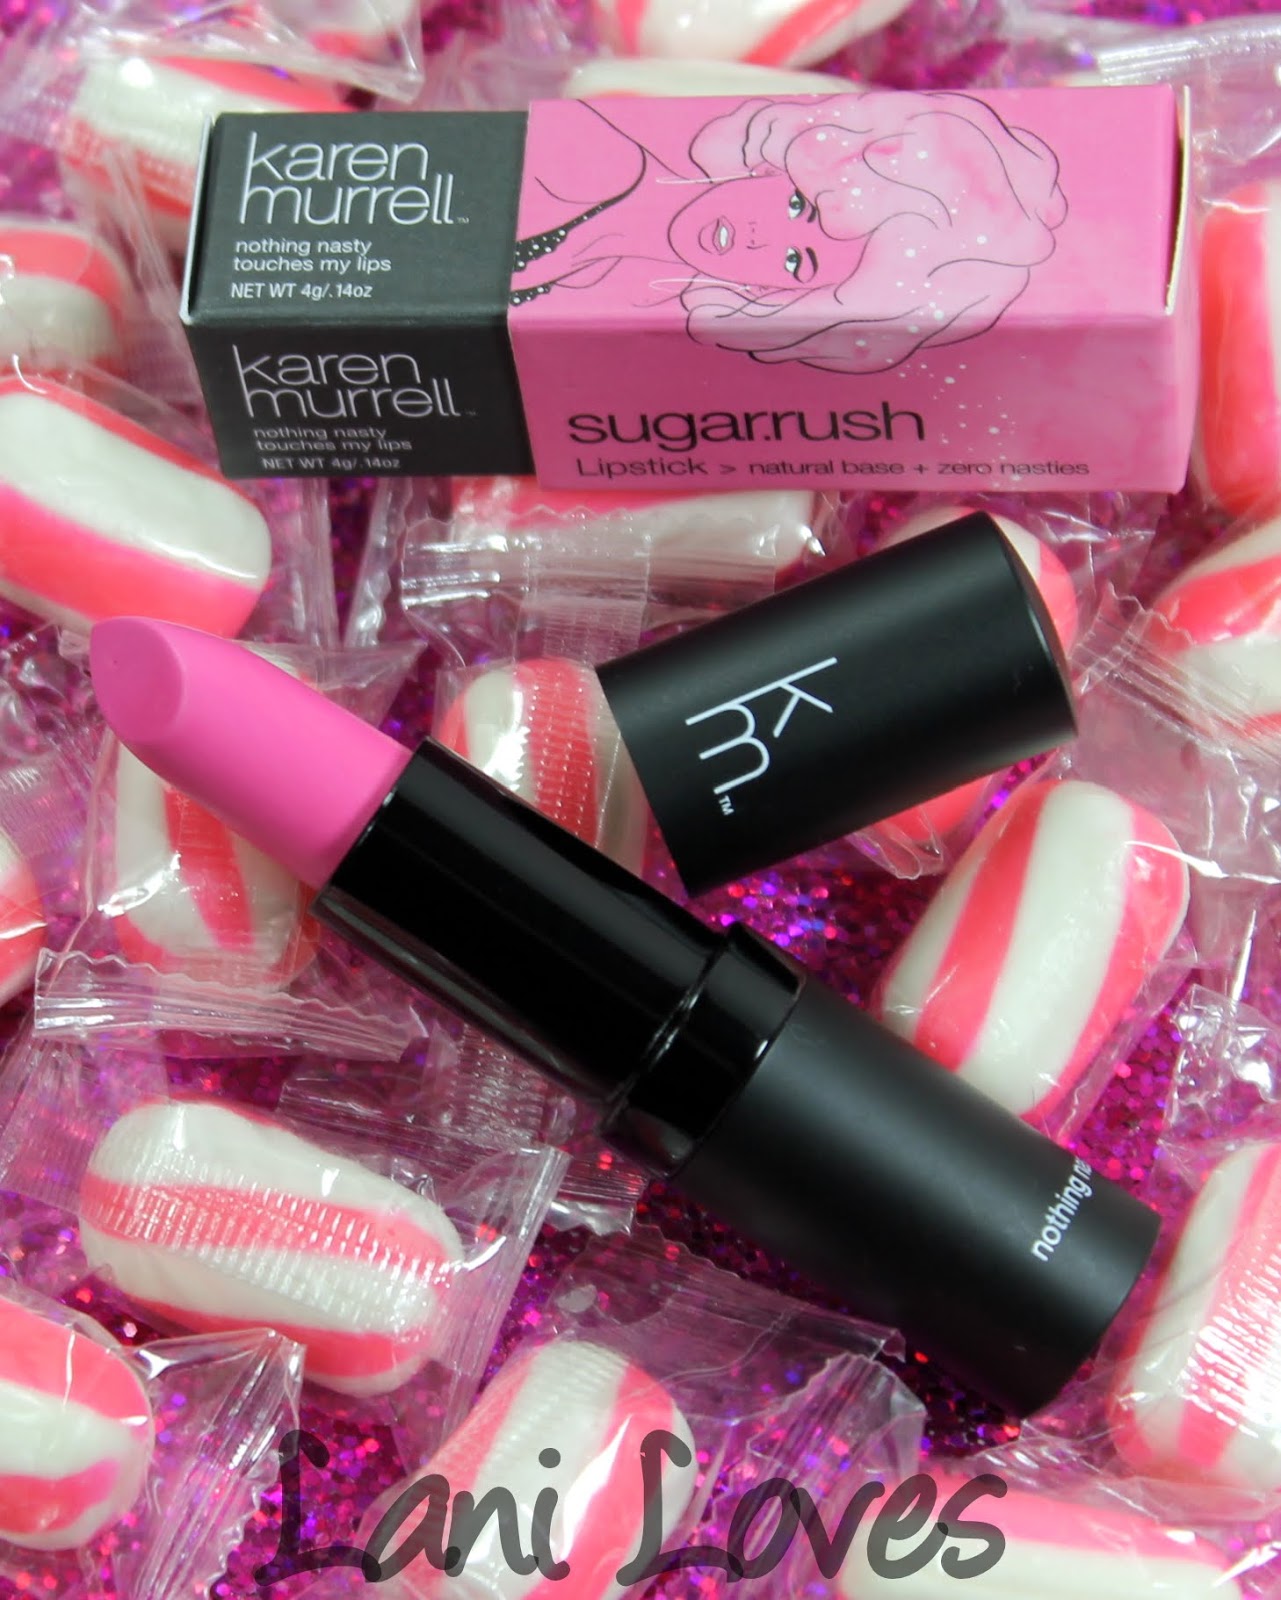 Karen Murrell Sugar Rush Lipstick Swatches & Review